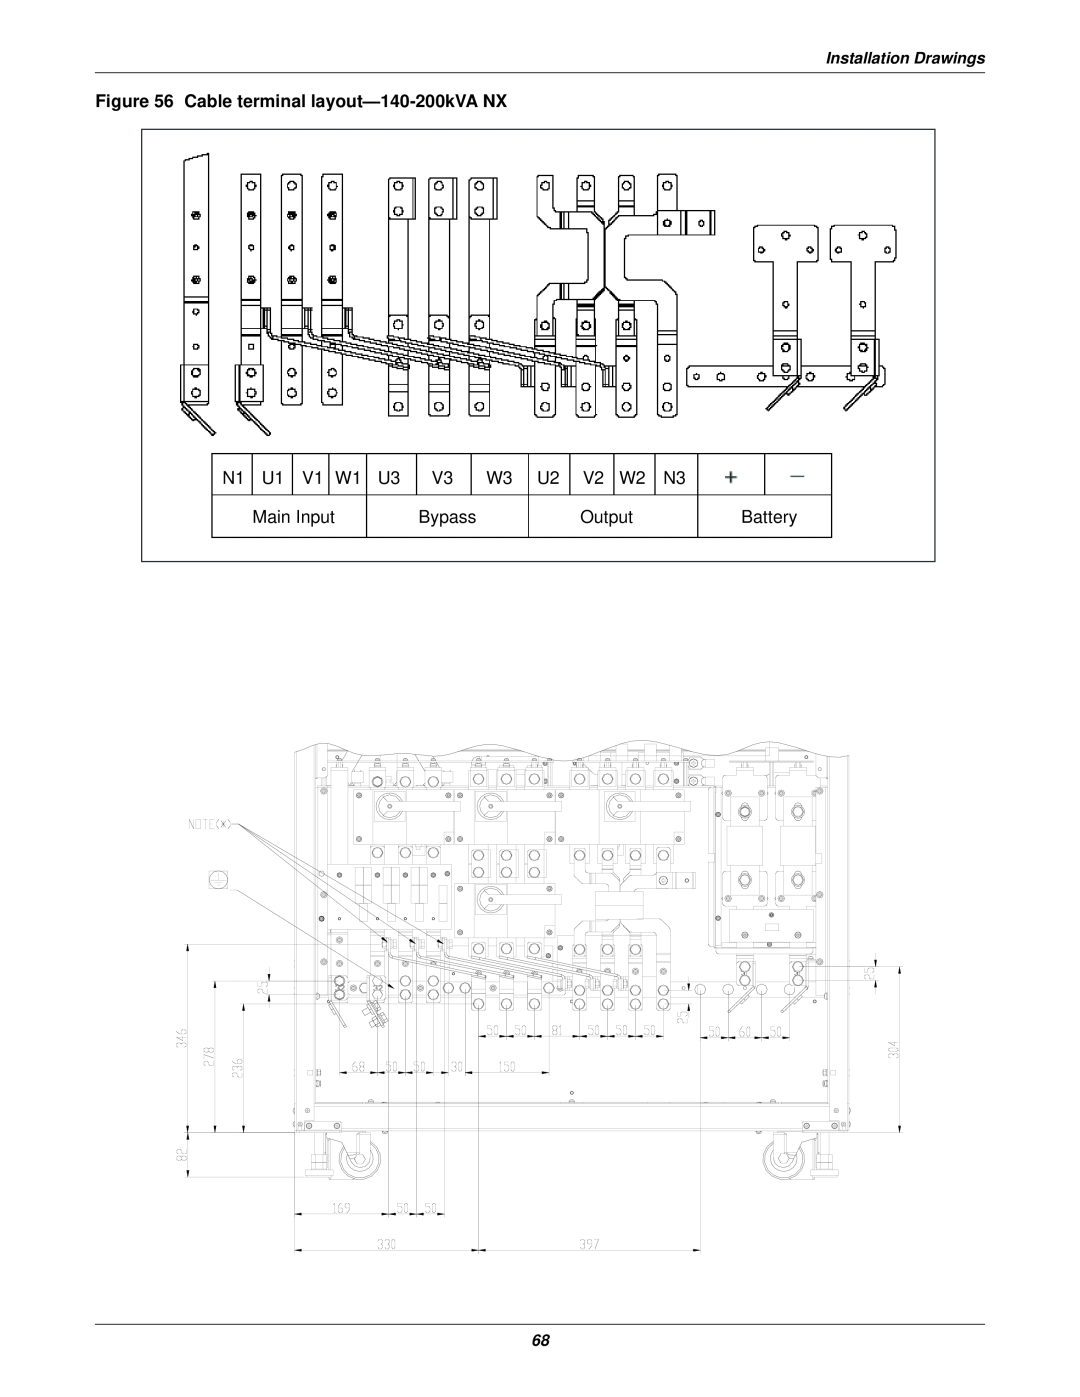 Emerson 30-200kVA, 400V Cable terminal layout-140-200kVA NX, N1 U1 V1 W1 Main Input, V3 Bypass, U2 V2 W2 N3 OutputBattery 